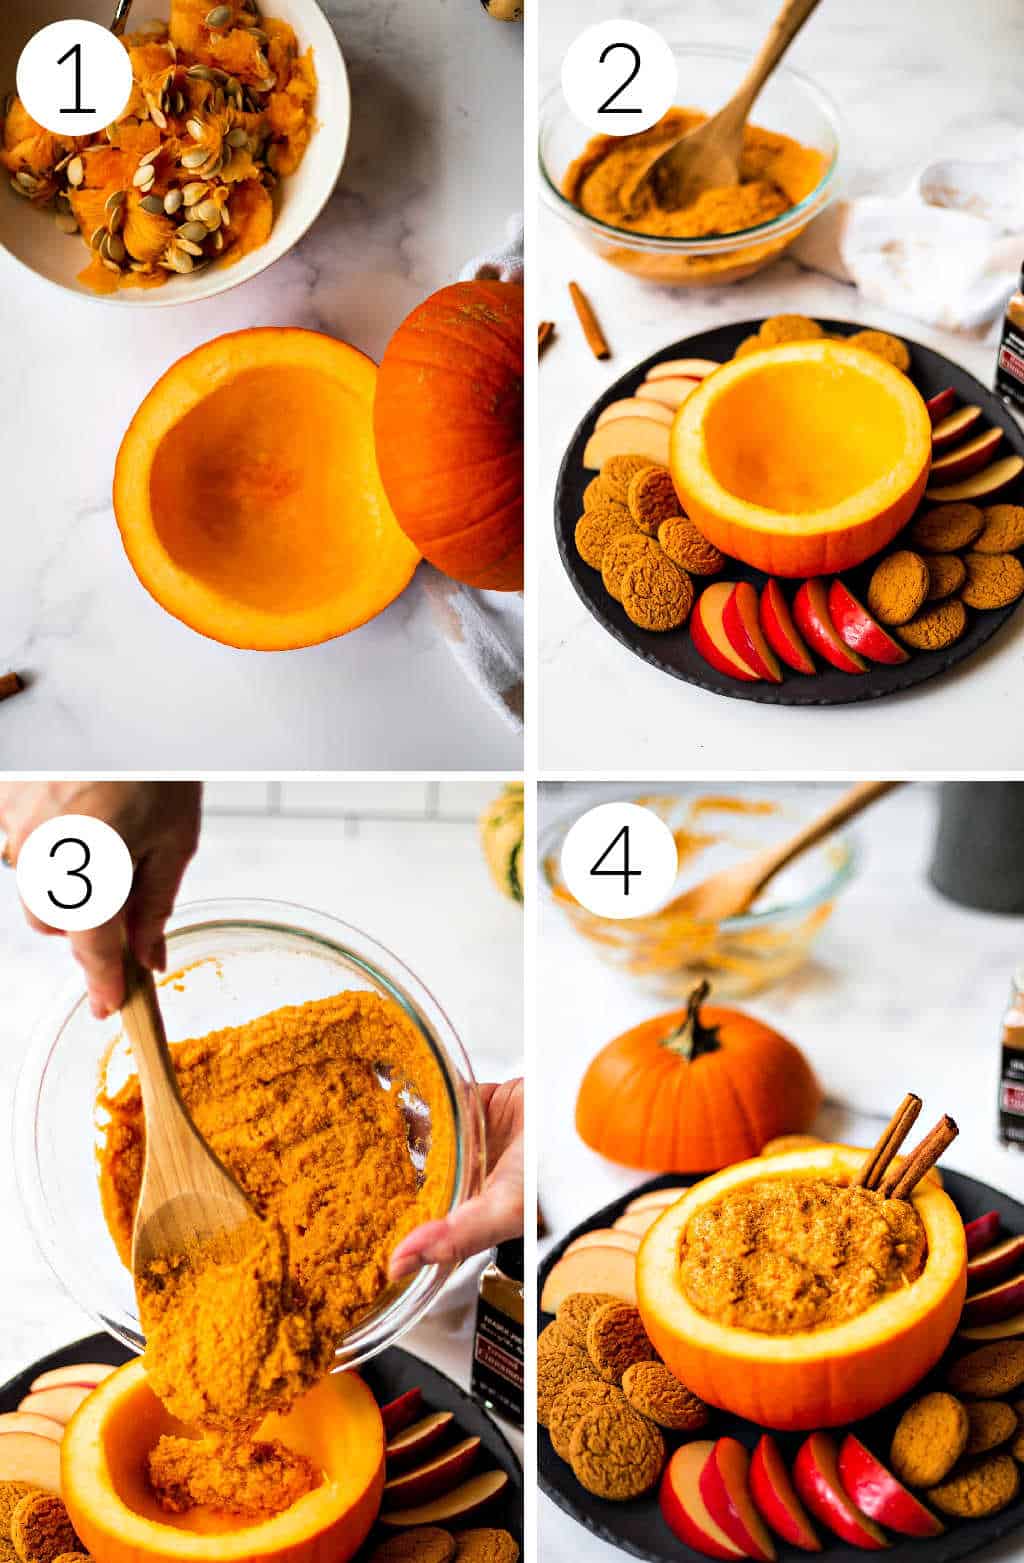 process for making a pumpkin bowl from a real pumpkin